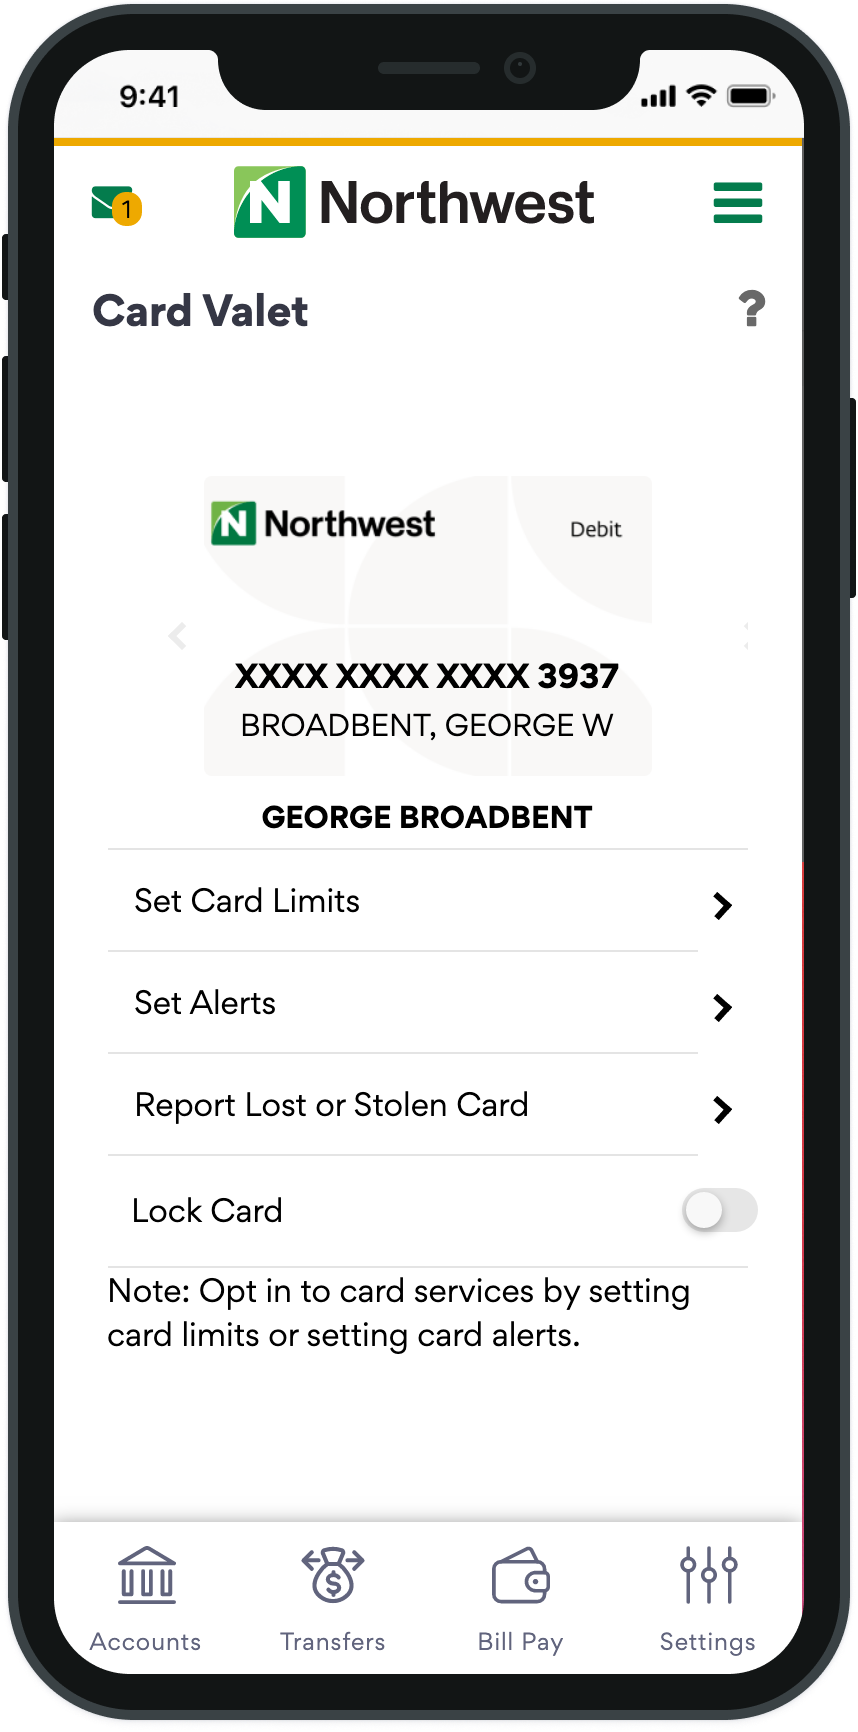 Northwest app screen: Card Valet